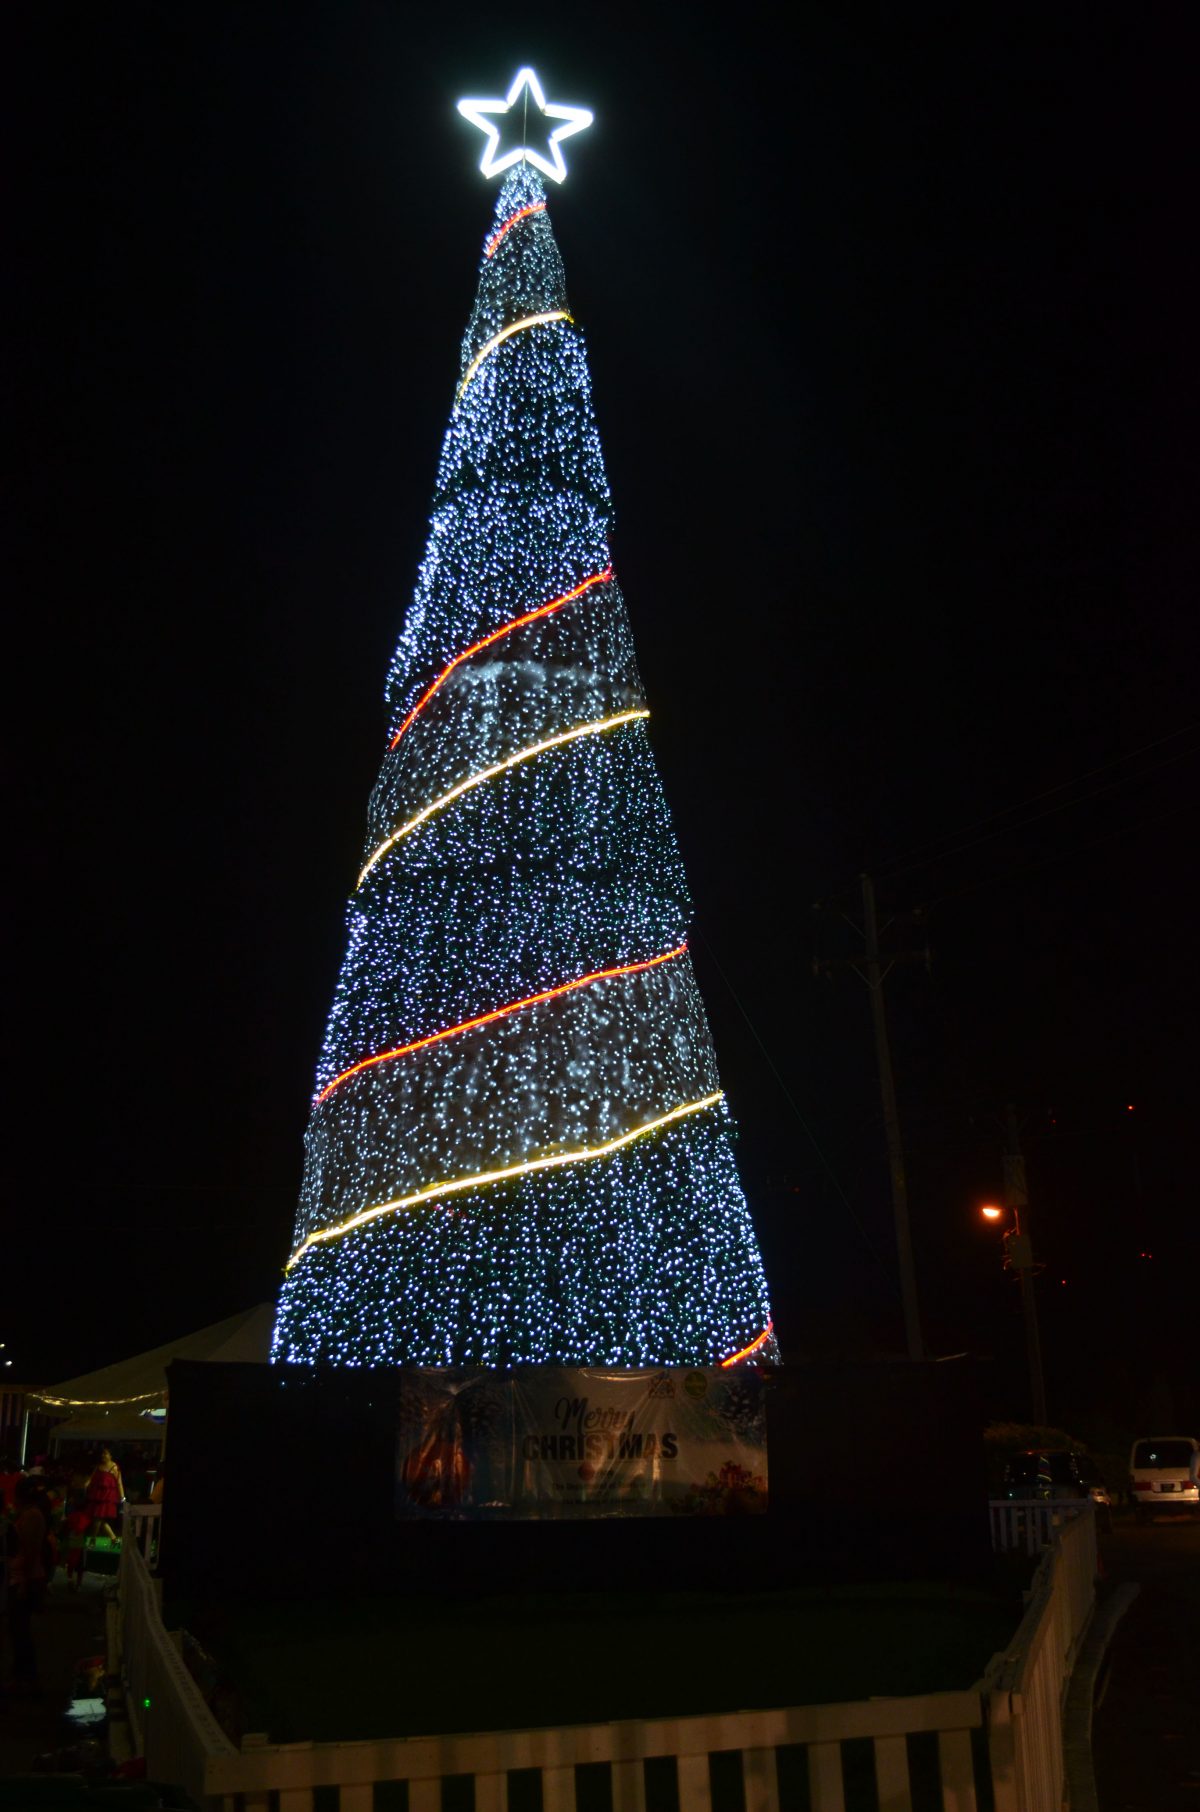 The Rahaman’s Park Christmas tree after last Friday’s lighting (Photo by Orlando Charles)